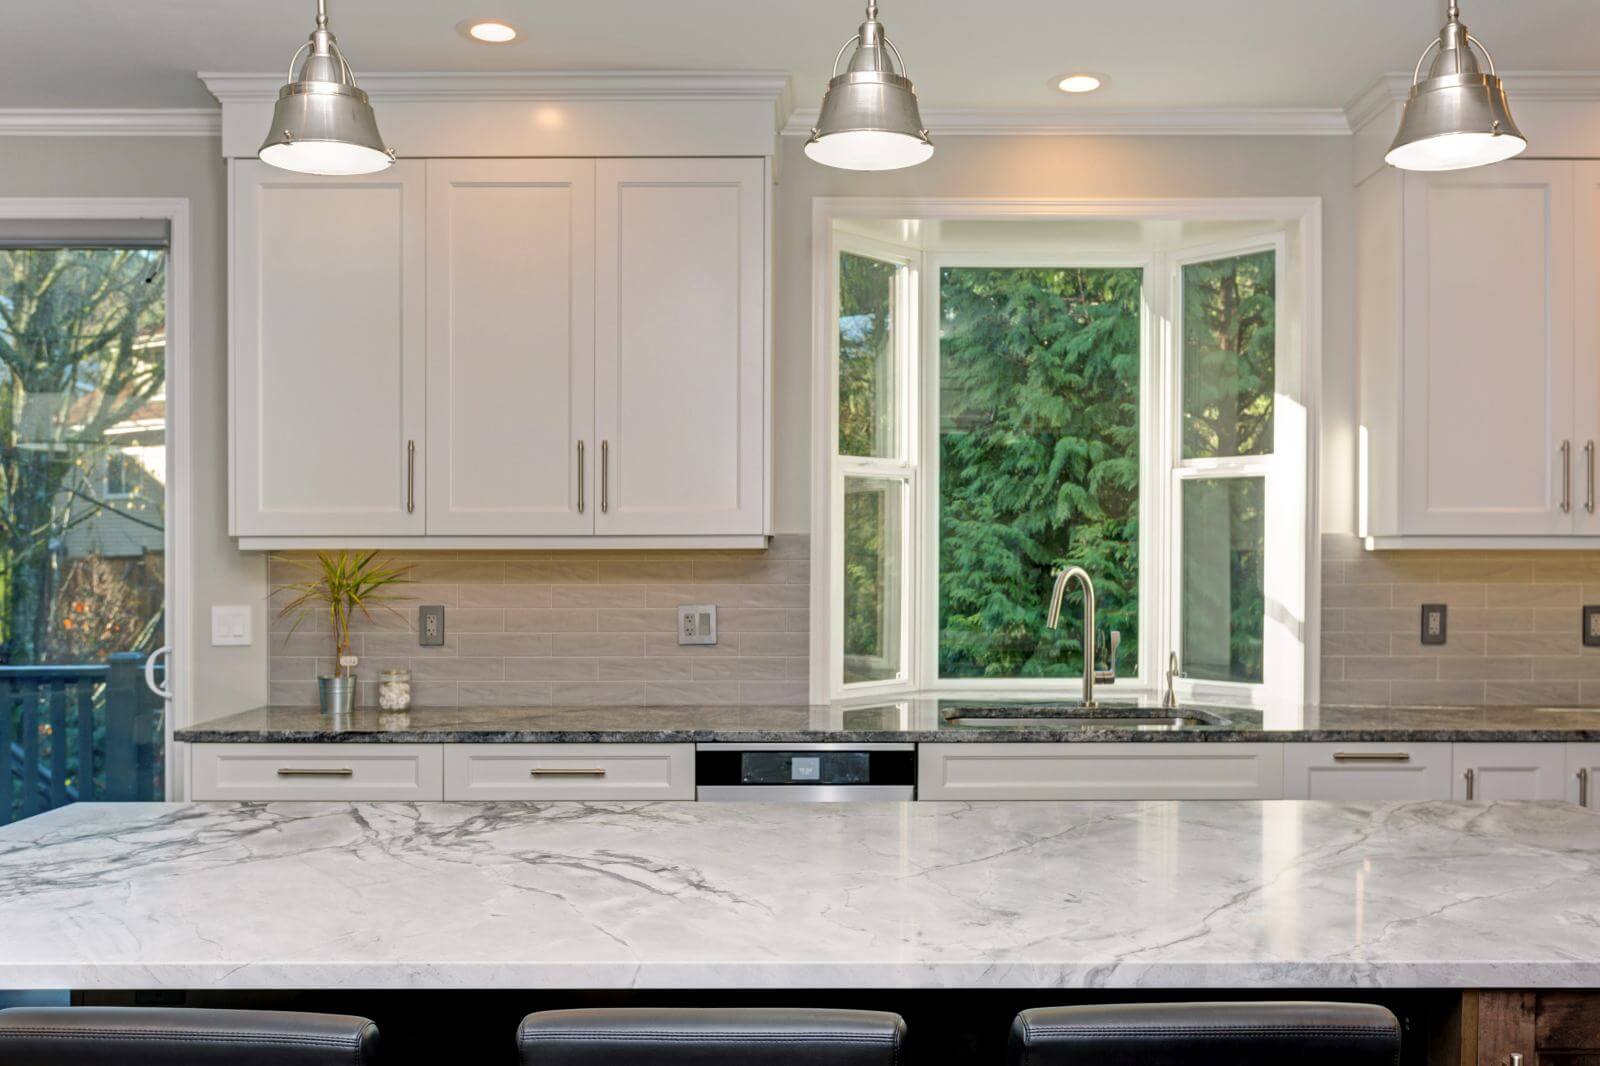 Luxury home interior boasts amazing white kitchen with custom white shaker cabinets, endless marble topped kitchen island and taupe tiled backsplash.